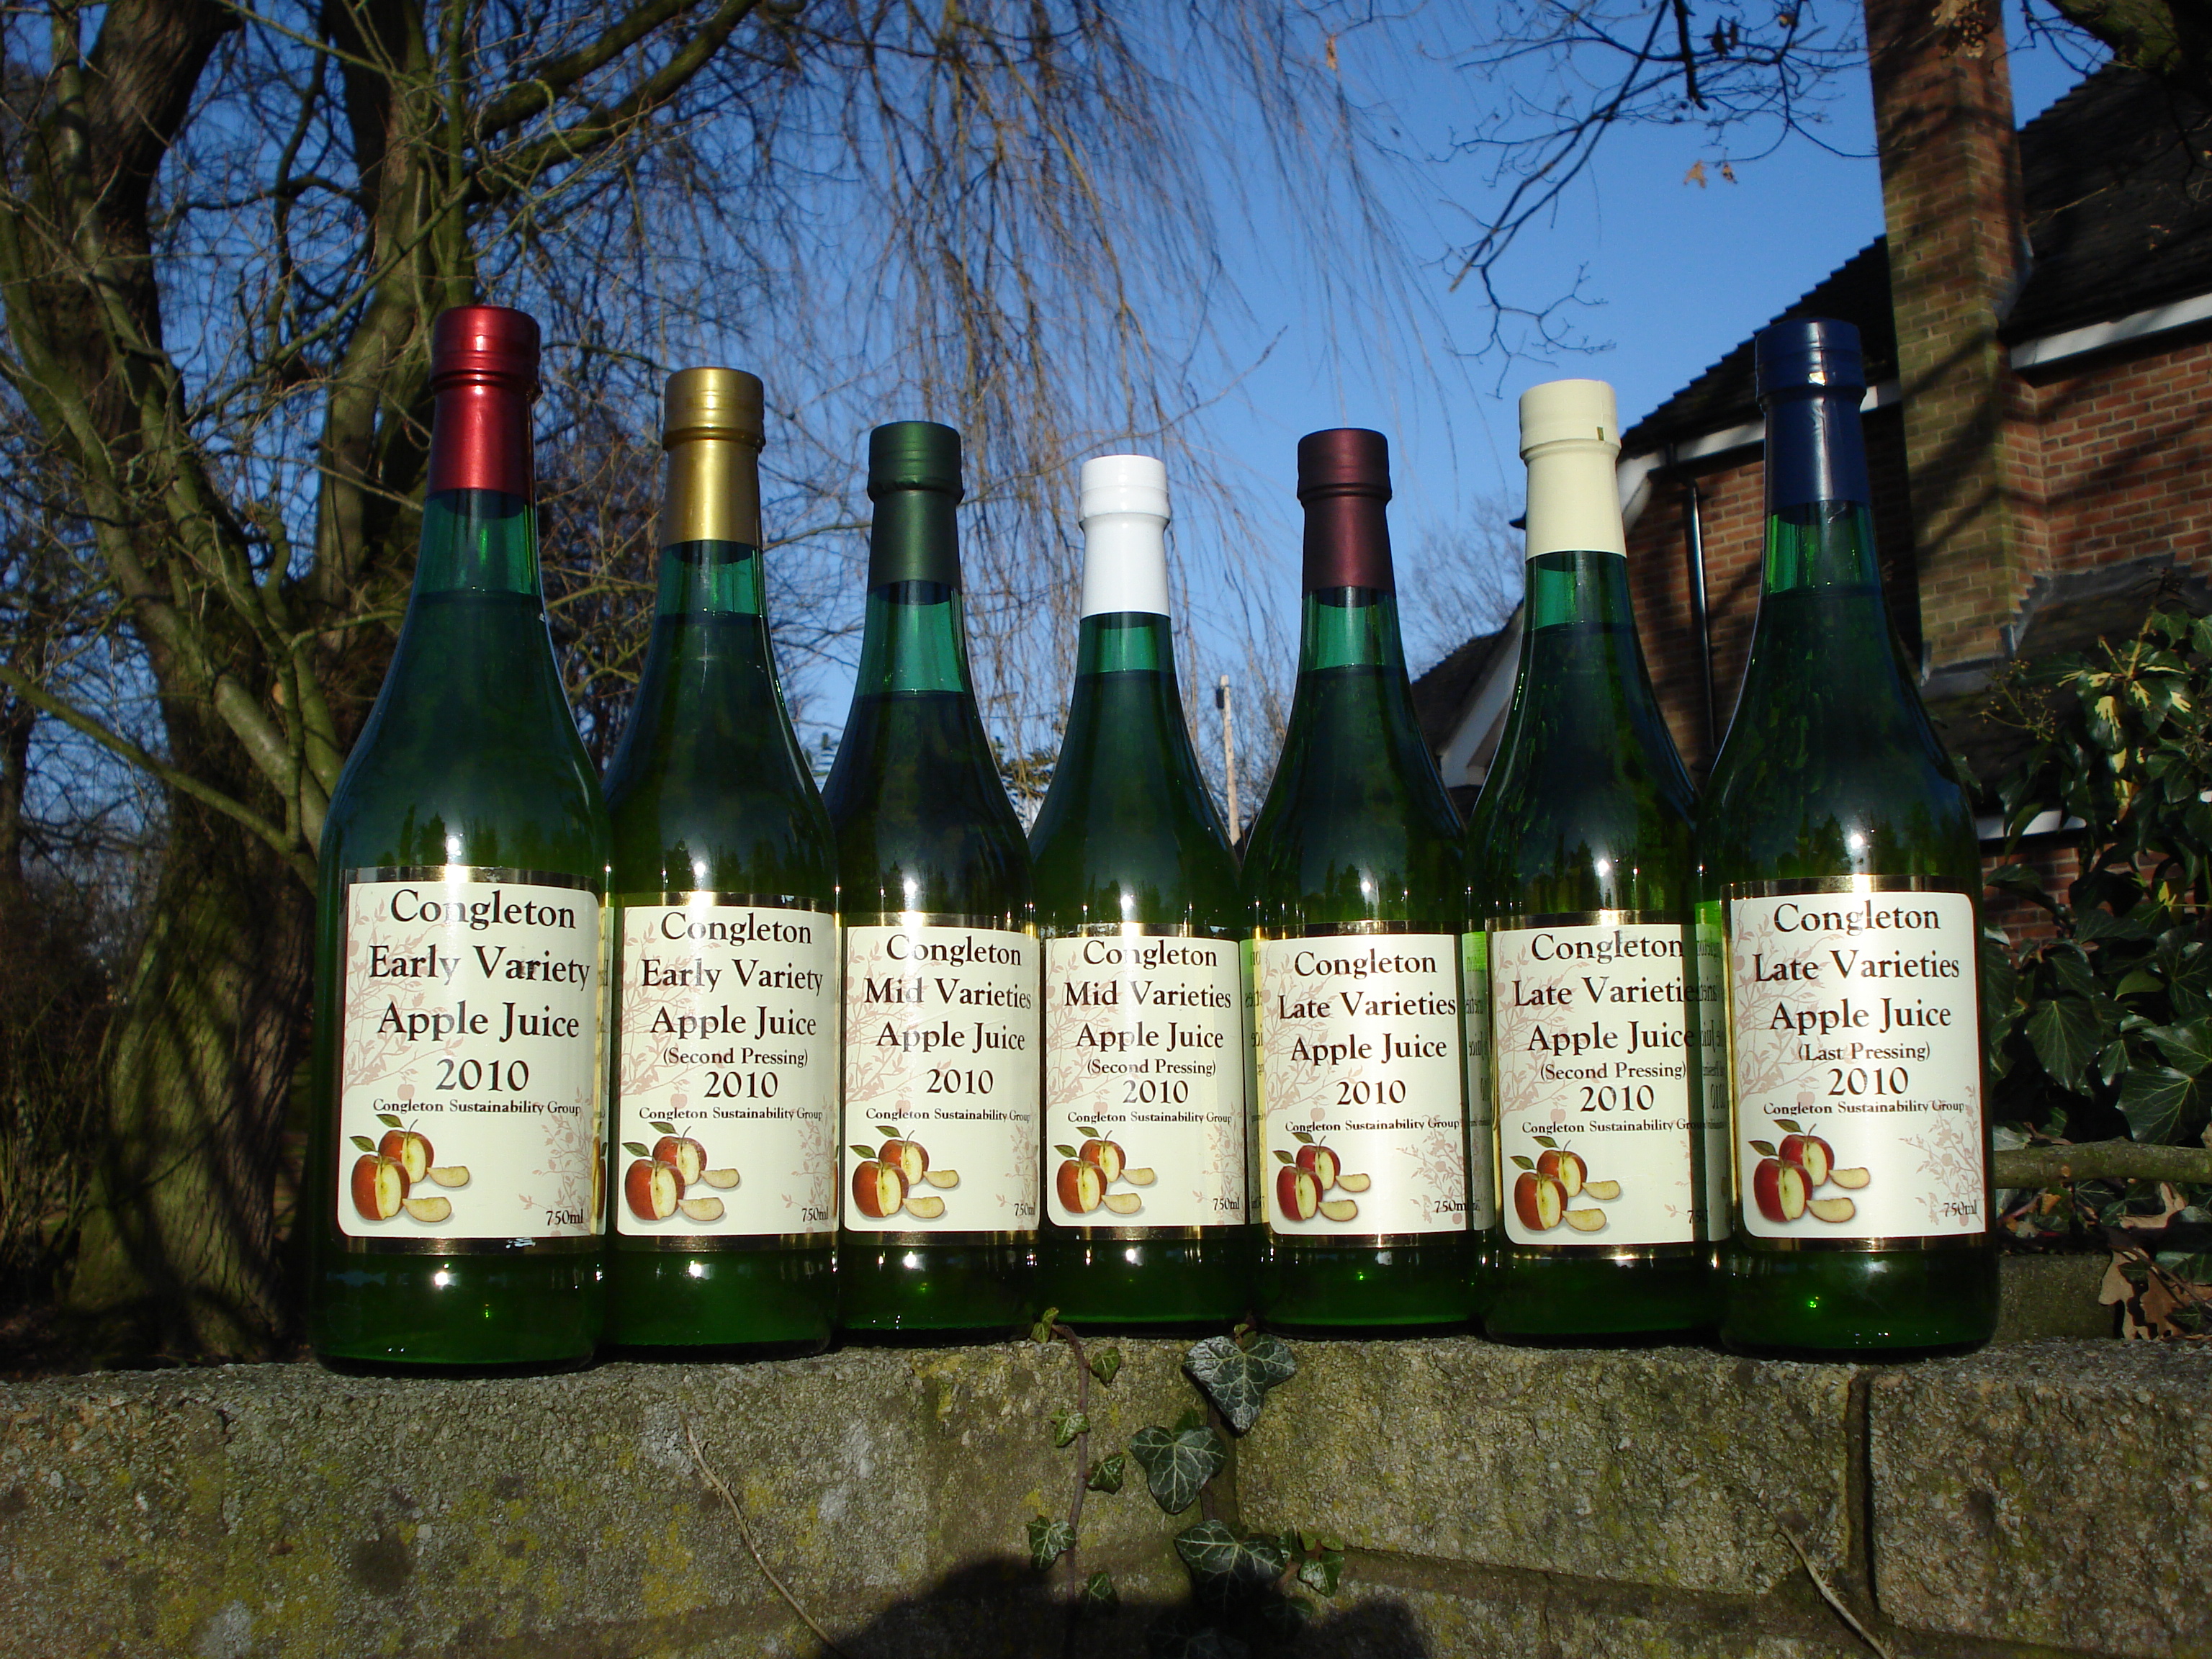 Congleton apple juice is born, the first bottles.